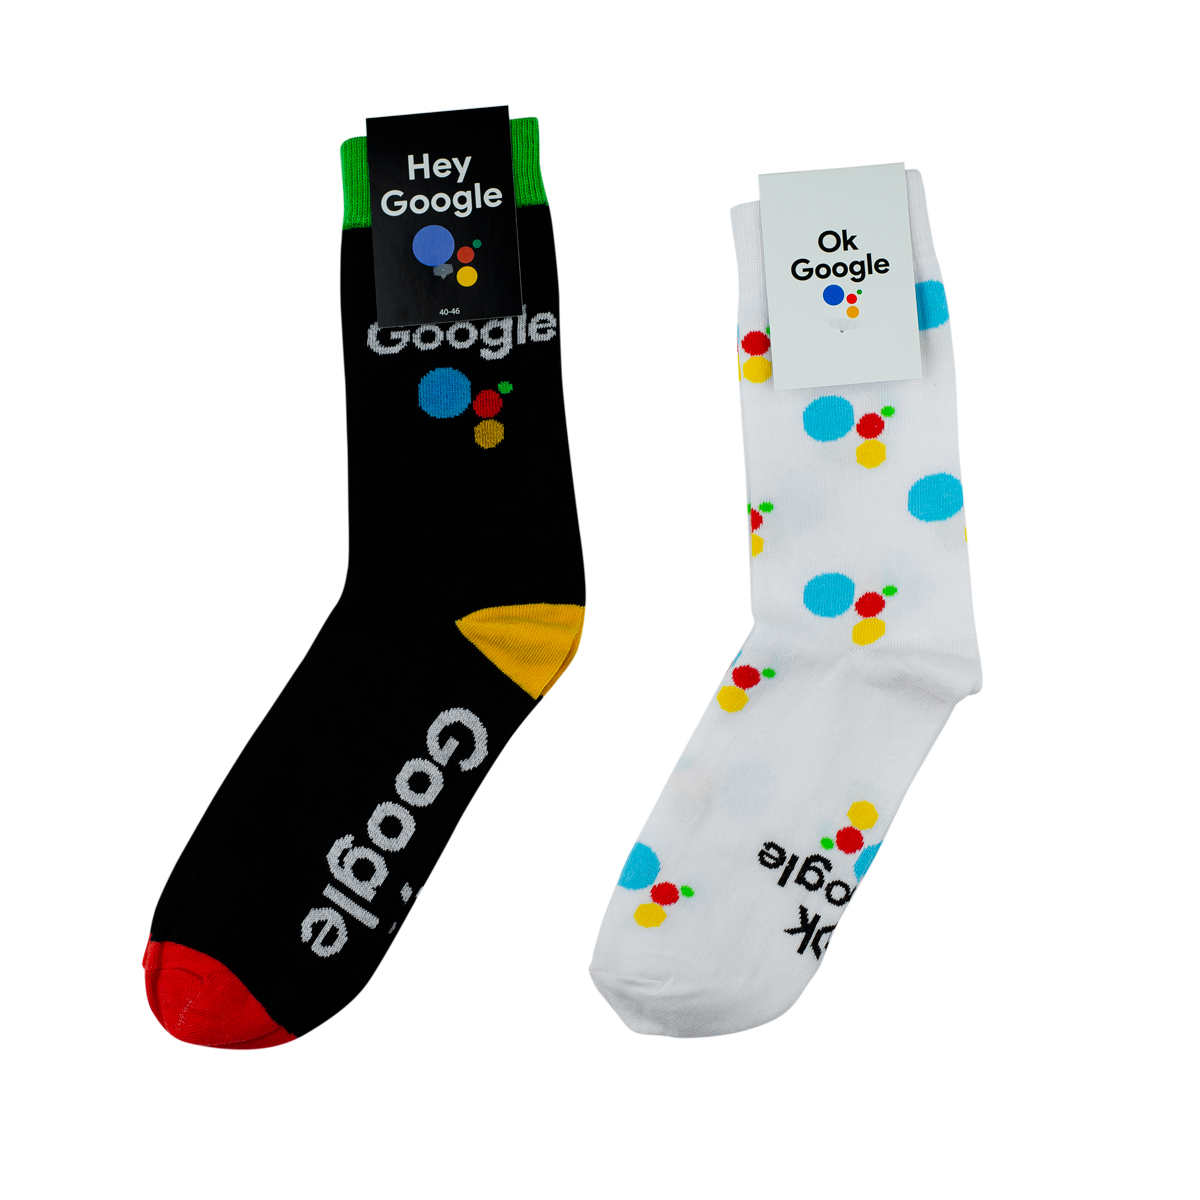 Google socks